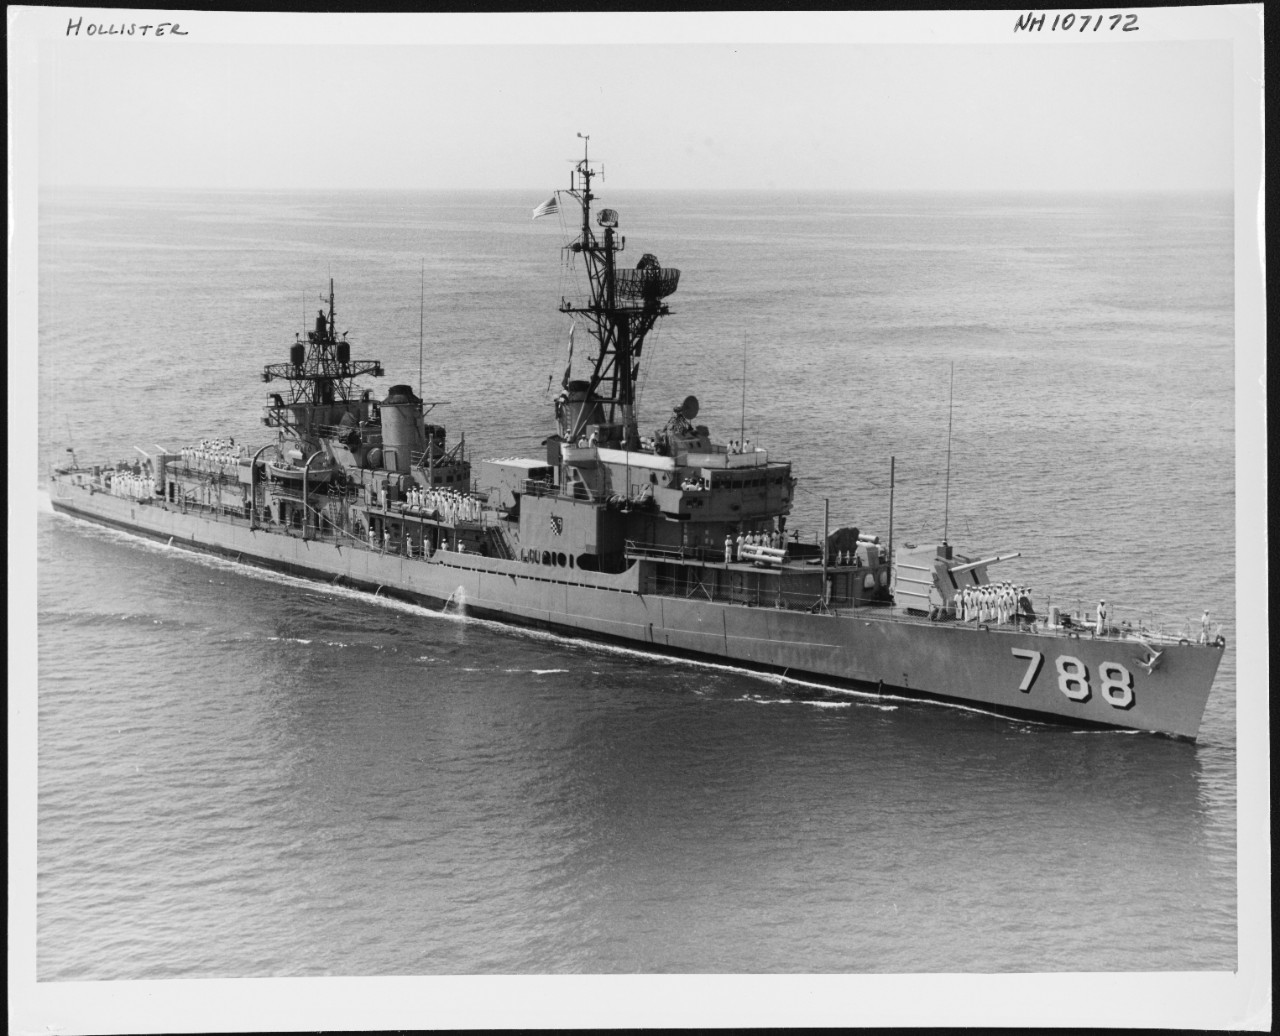 Photo #: NH 107172  USS Hollister